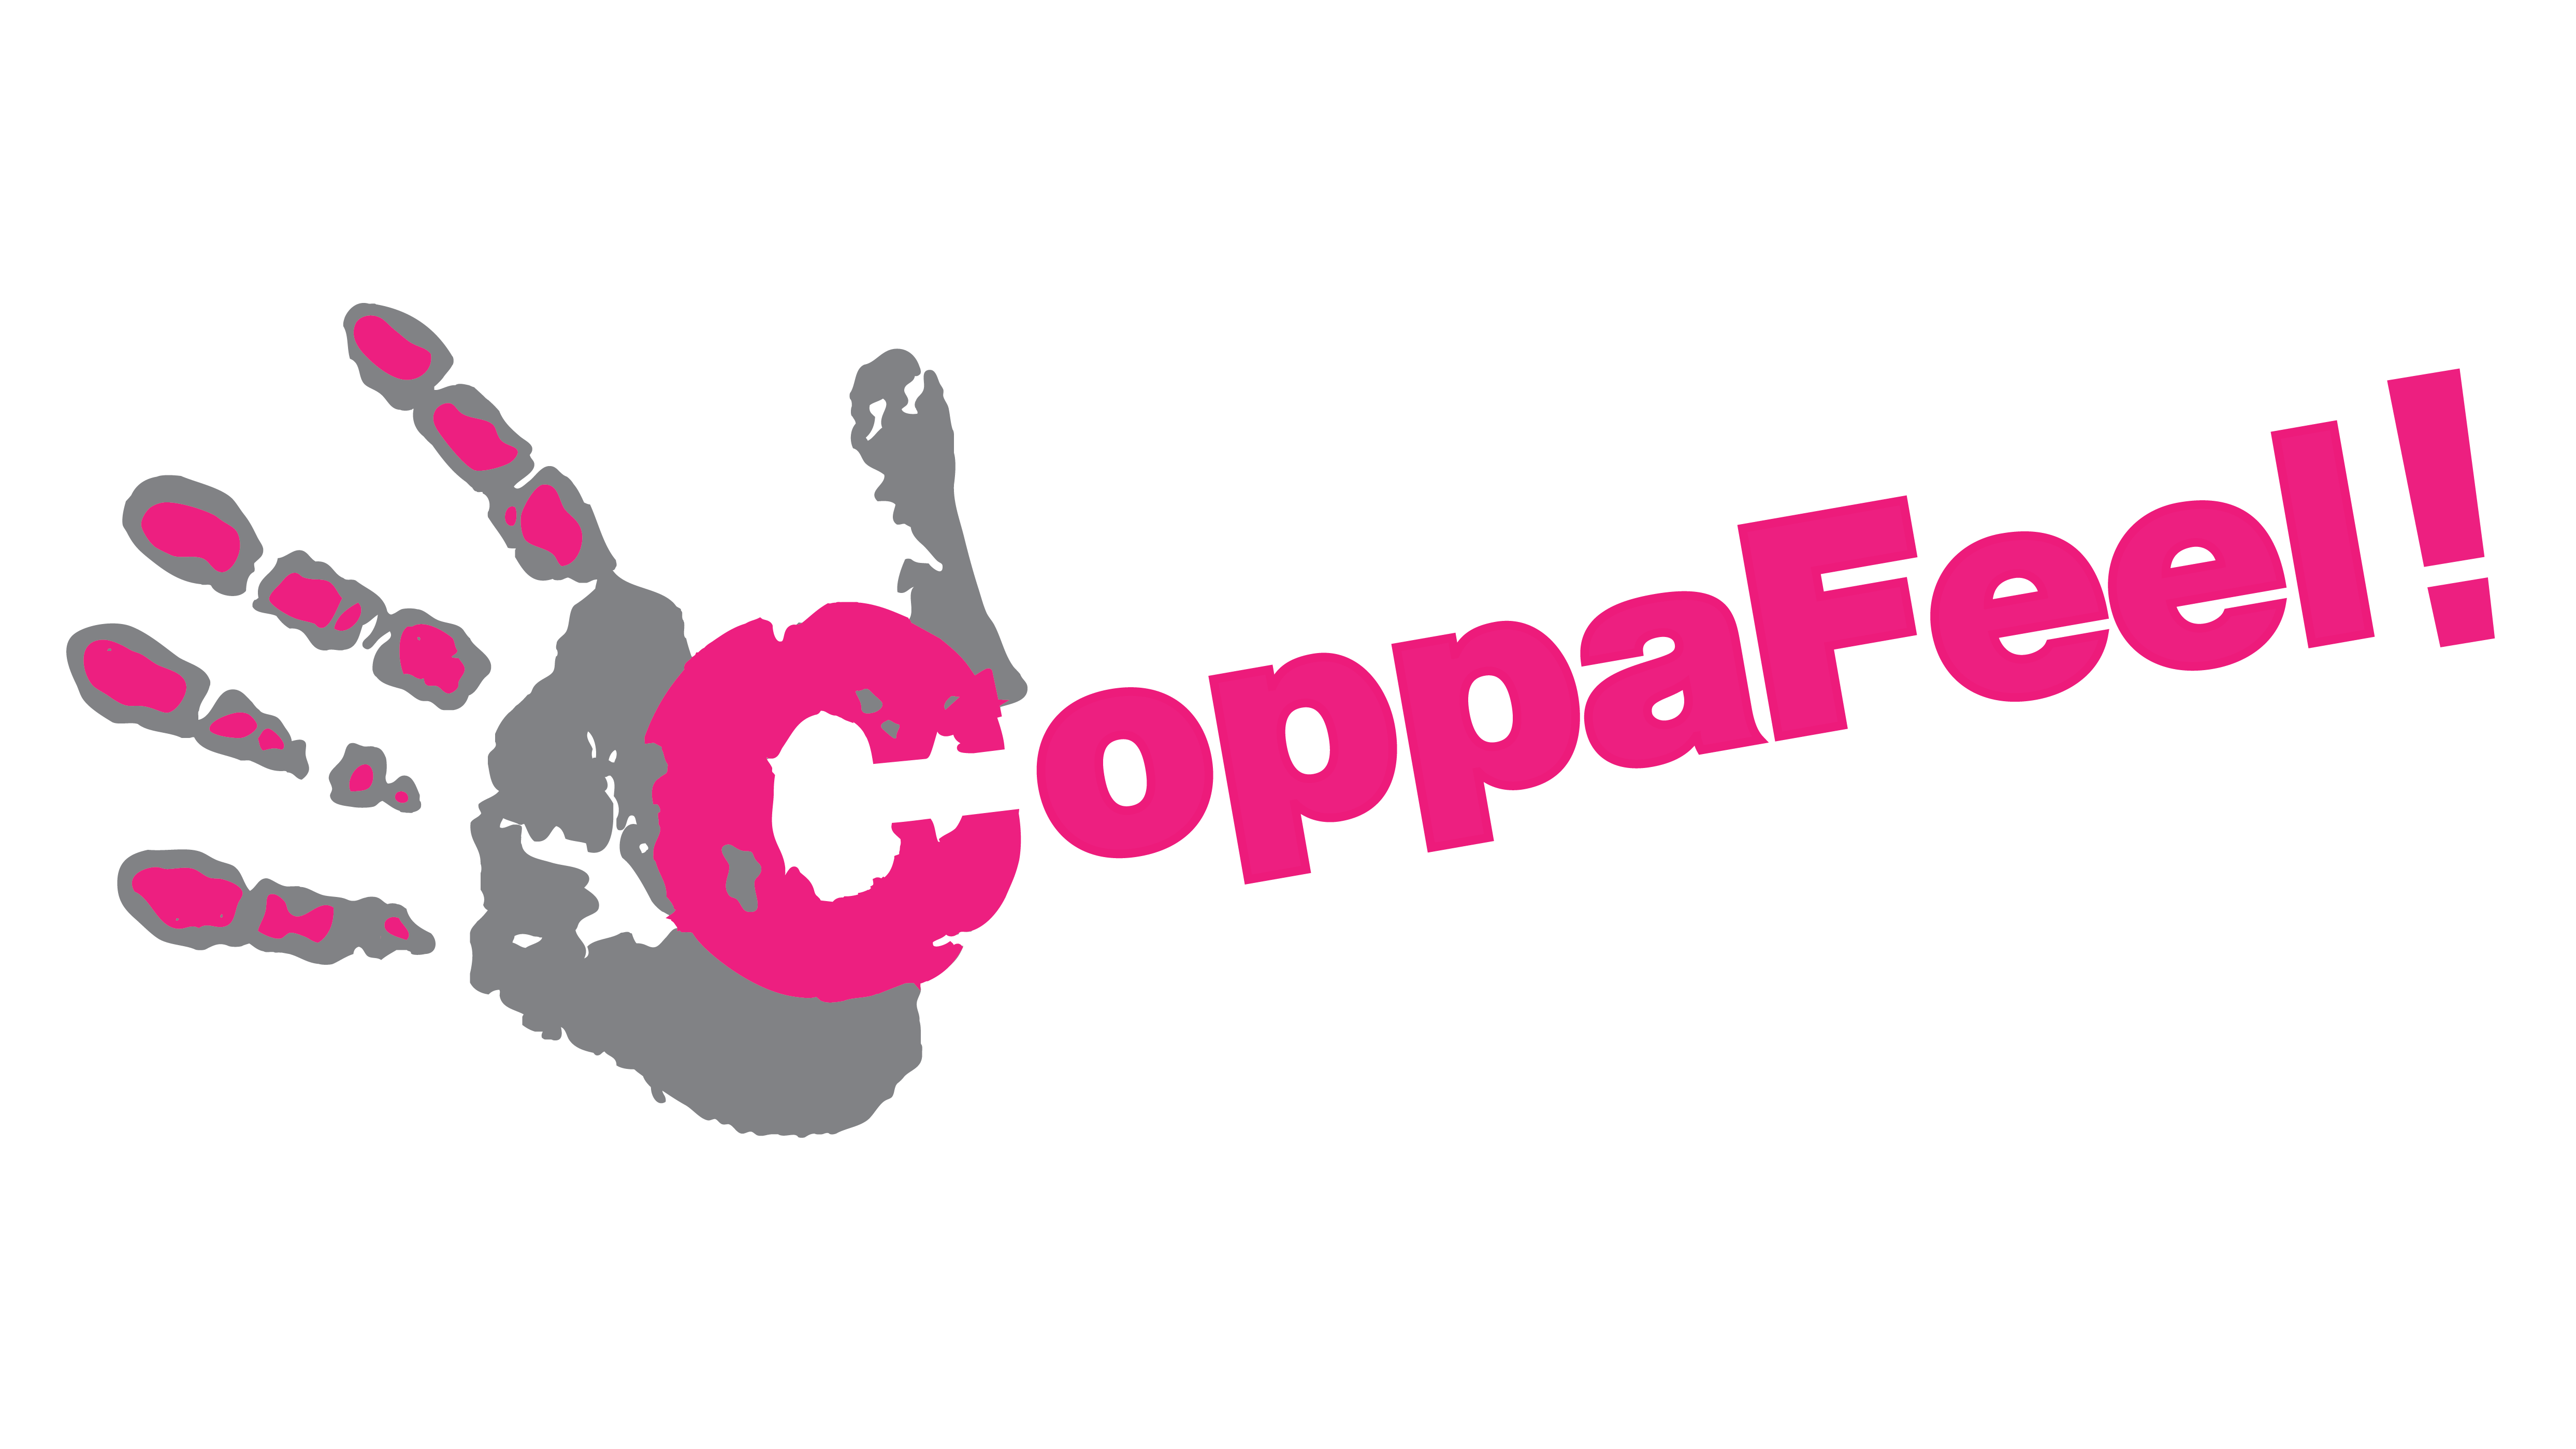 CoppaFeel! charity logo